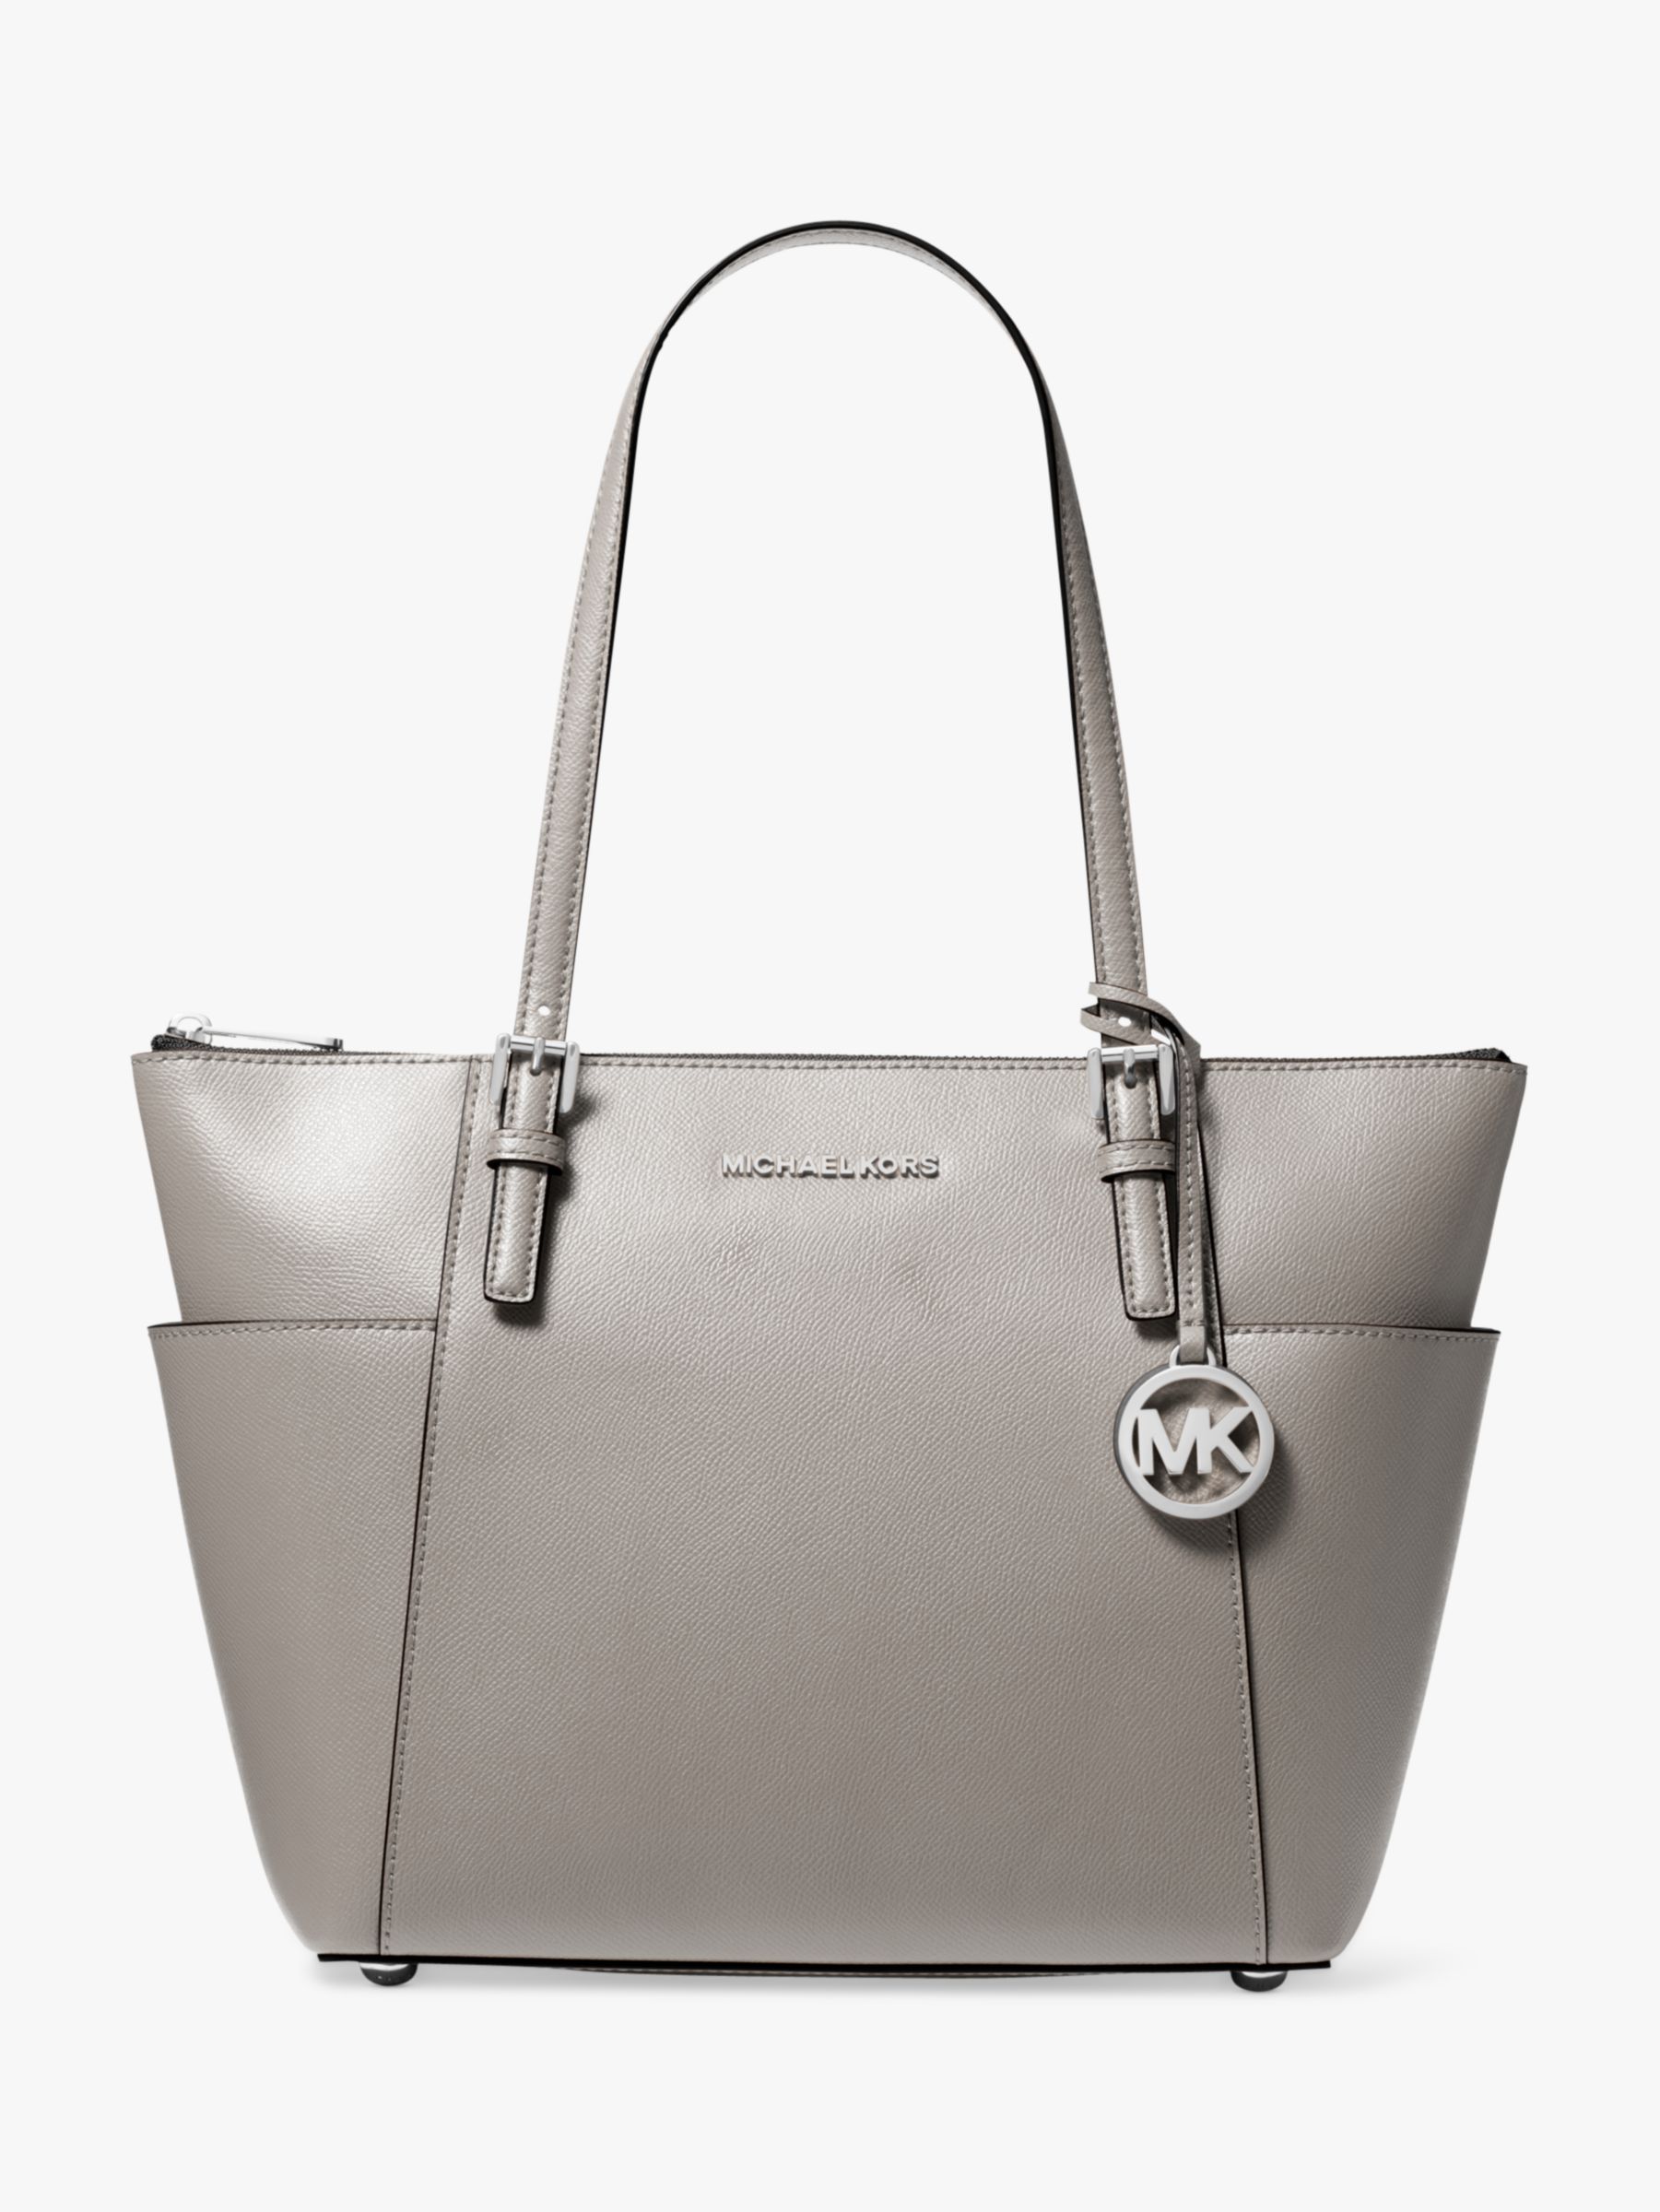 grey michael kors purse